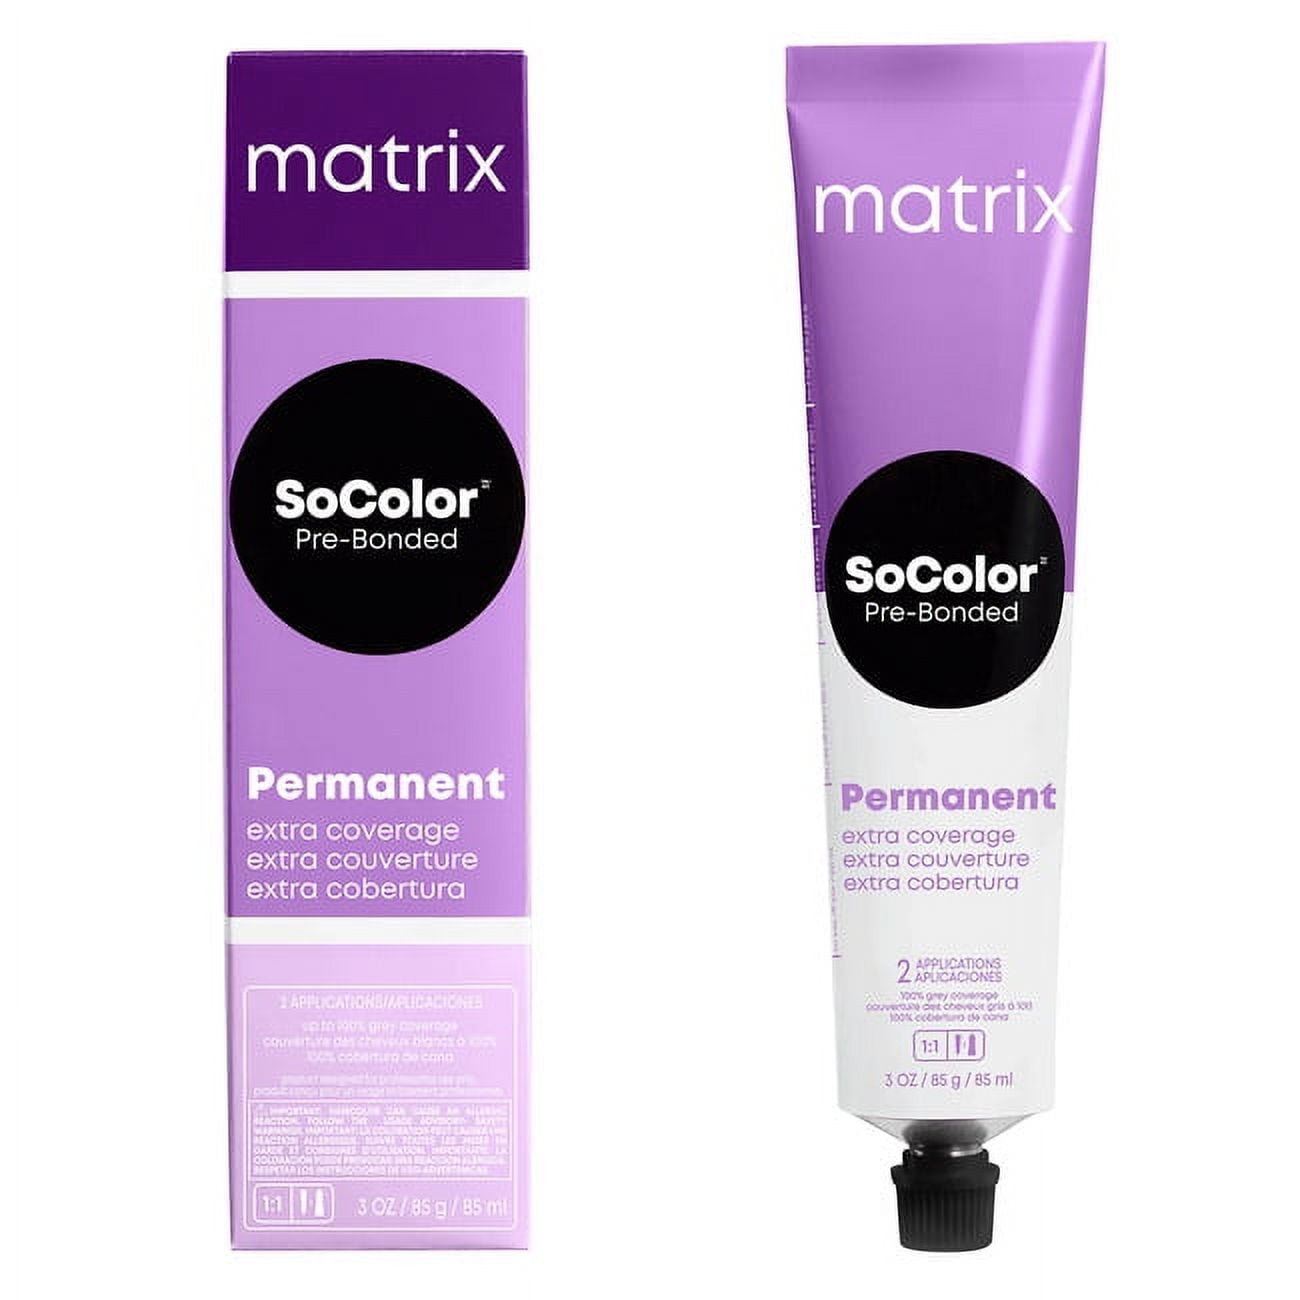 Matrix COLOR OBSESSED SO SILVER SHAMPOO reviews in Shampoo - Prestige -  ChickAdvisor